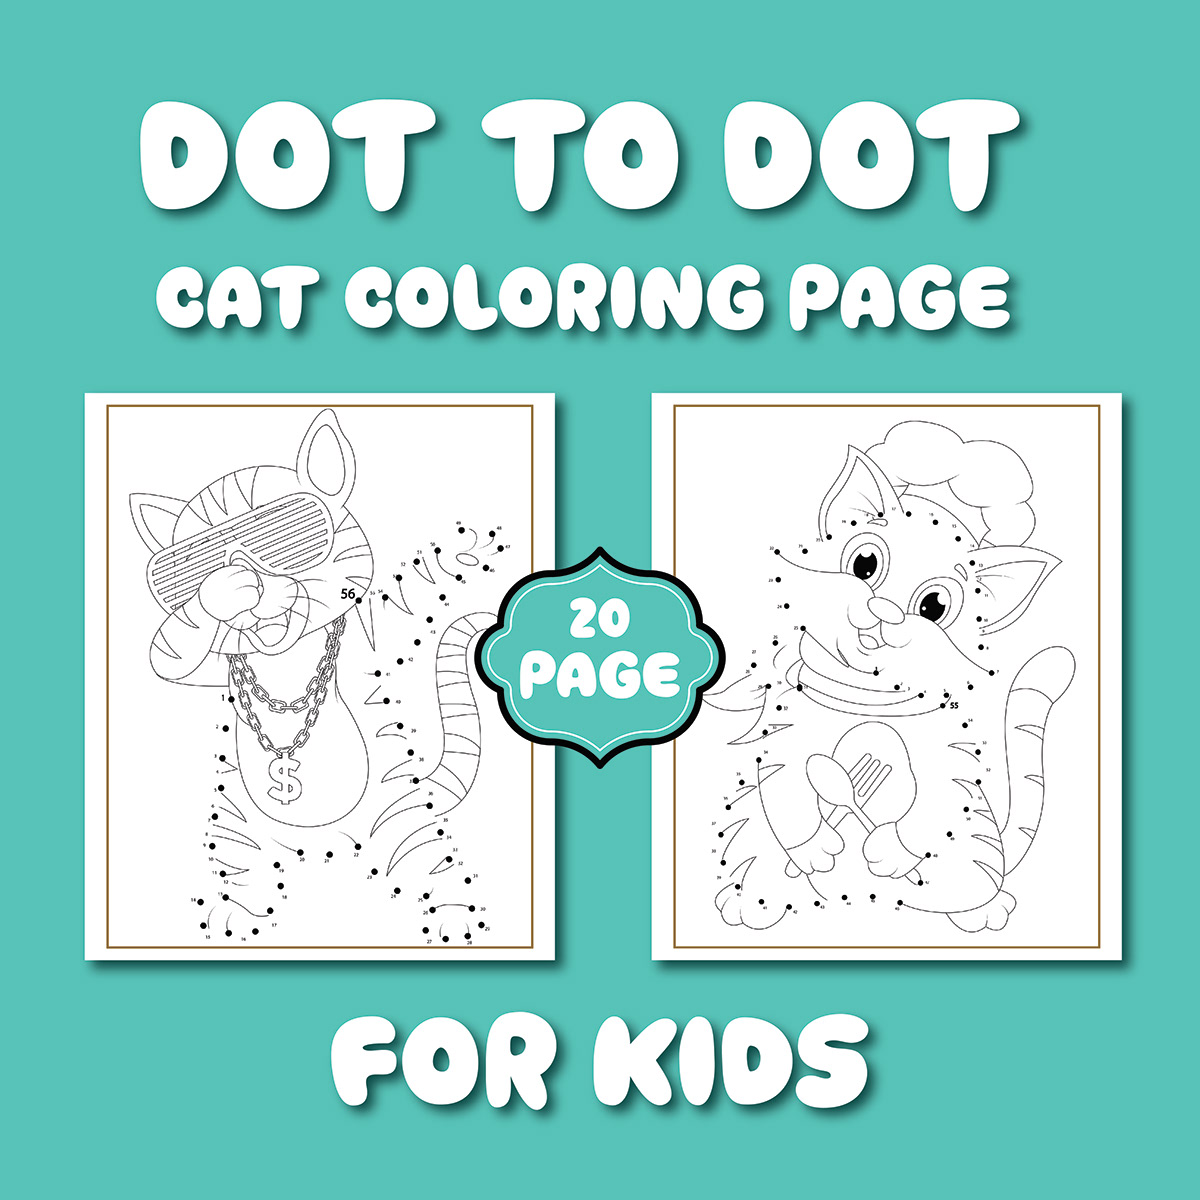 coloring kids ILLUSTRATION  dots Cat catcoloringbook cats coloringbook coloringpages dottodotbook